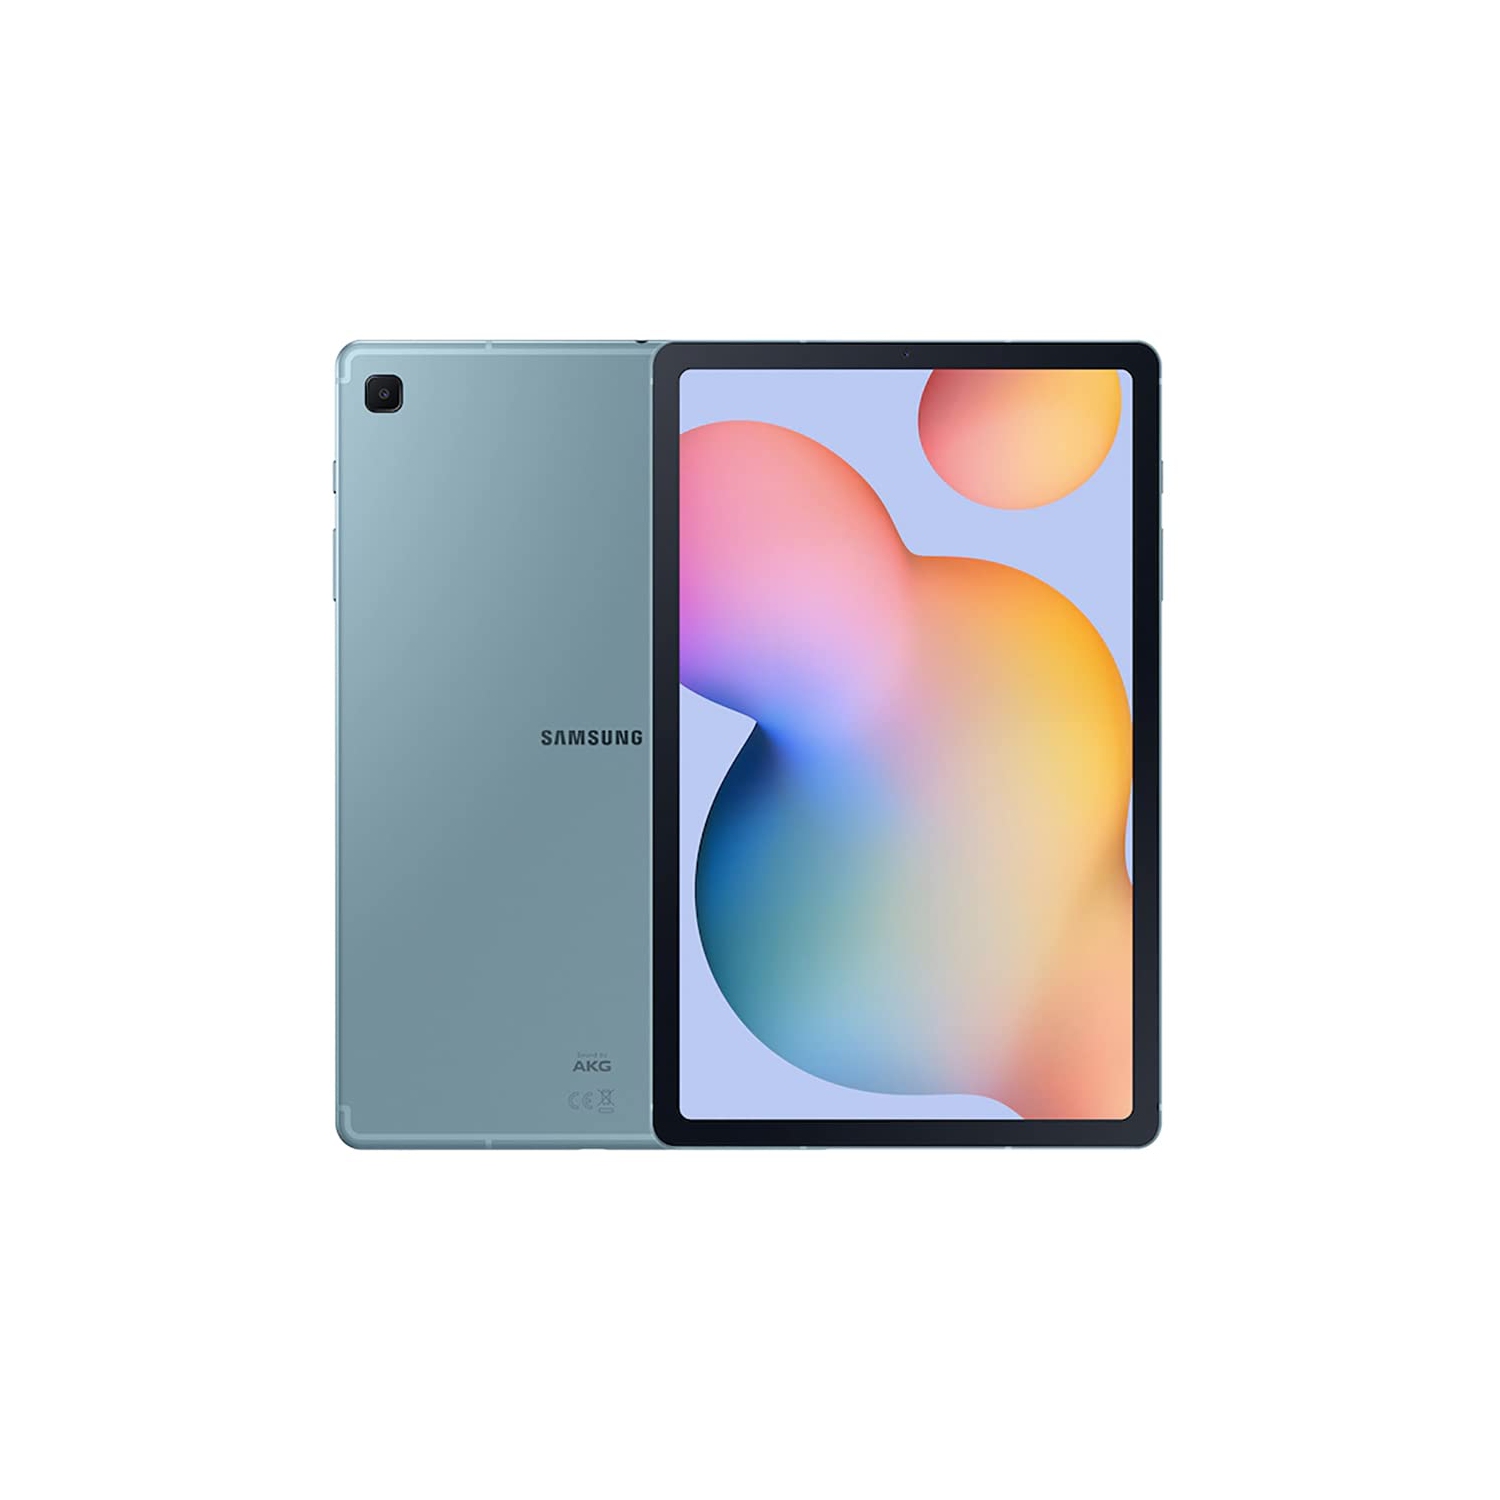 Samsung Galaxy Tab S6 Lite 10.4" 64GB Android Tablet (Angora Blue)